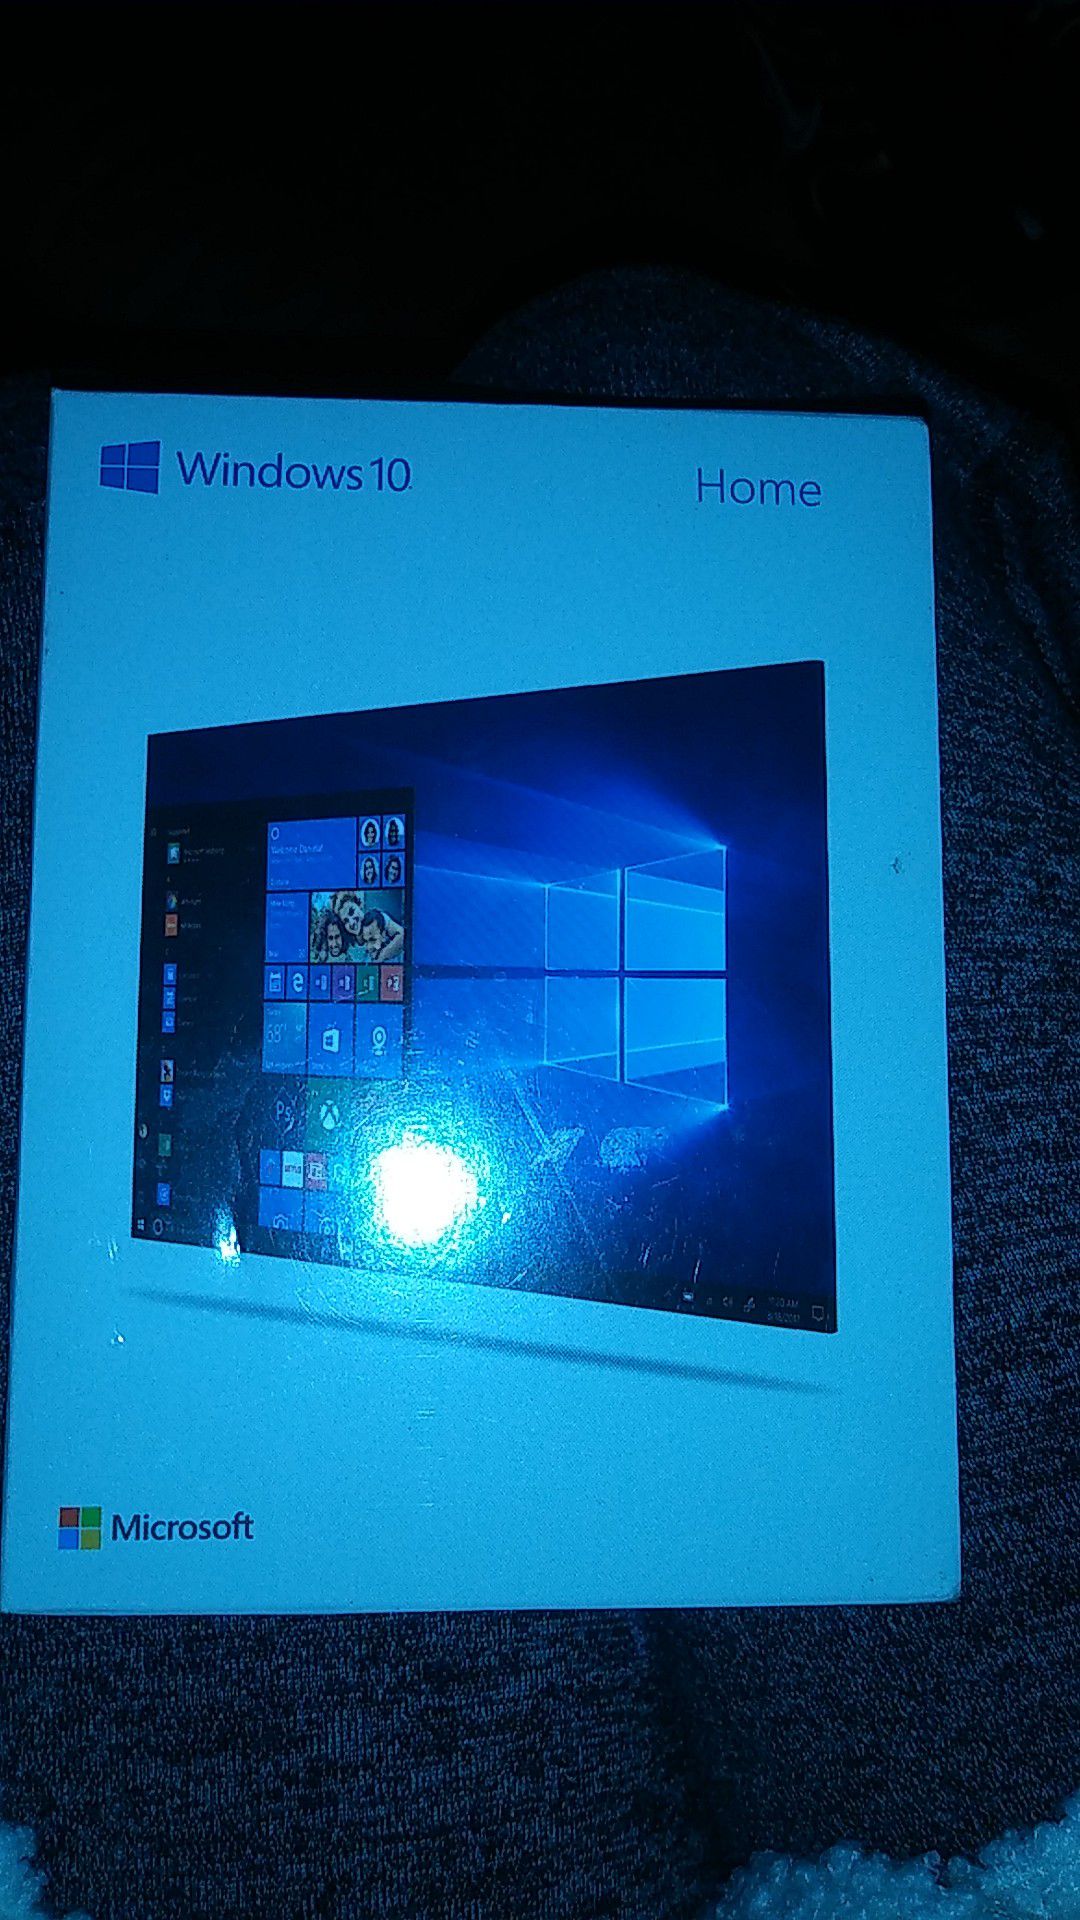 Windows 10. Home